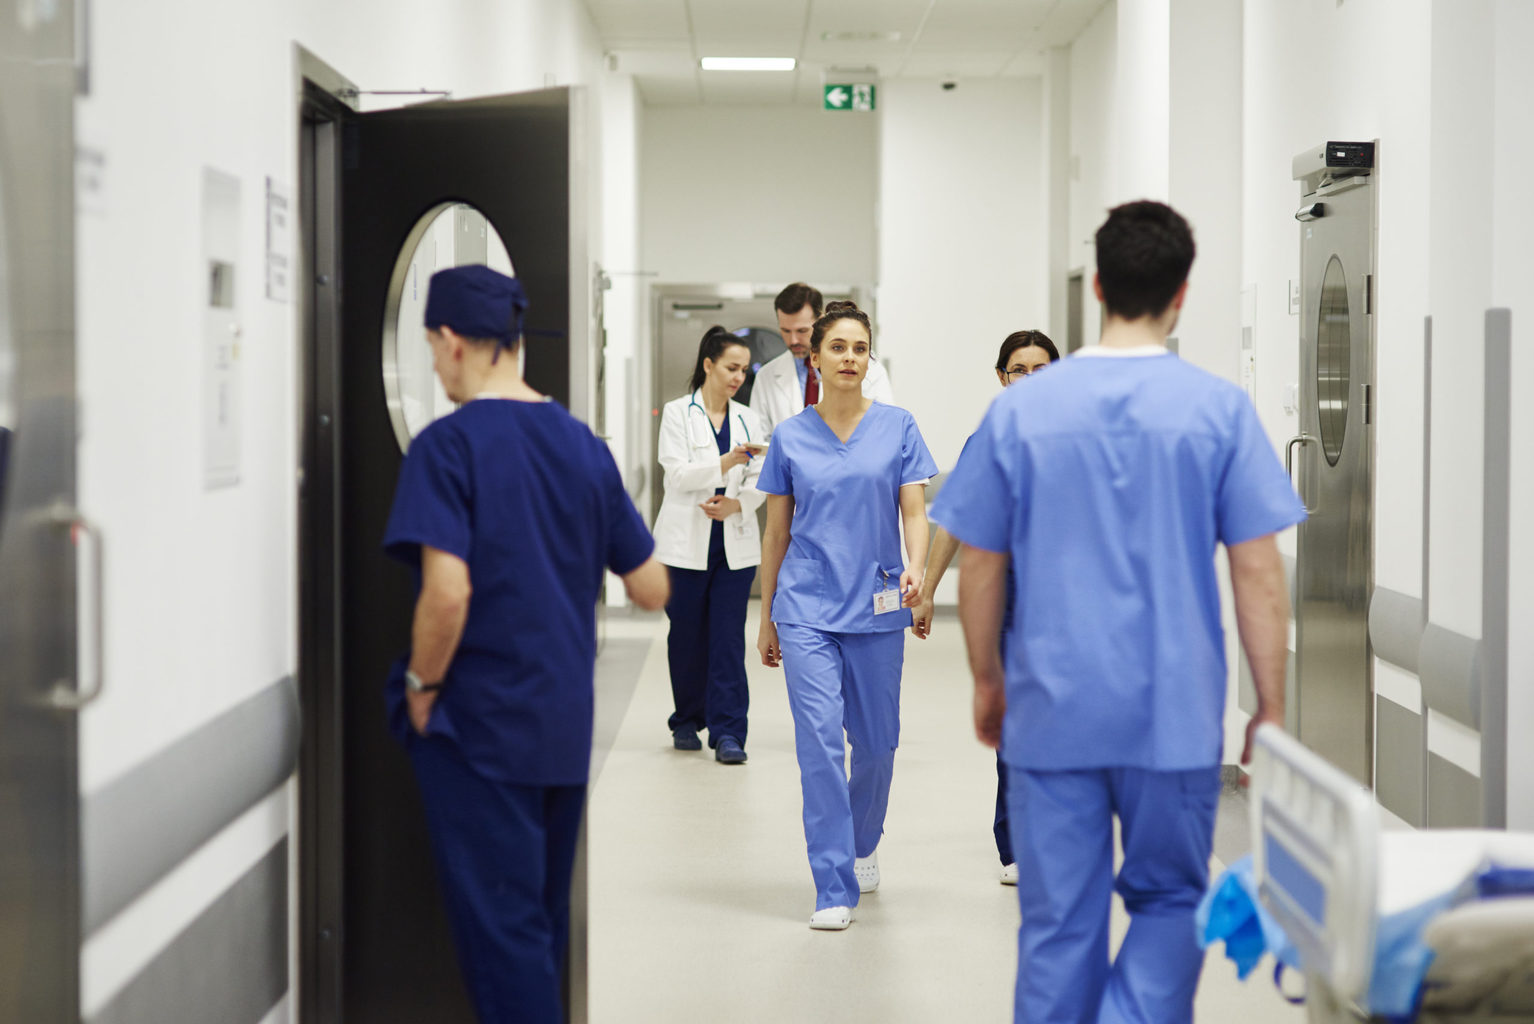 Doctors and nurses walking through corridor in hospital